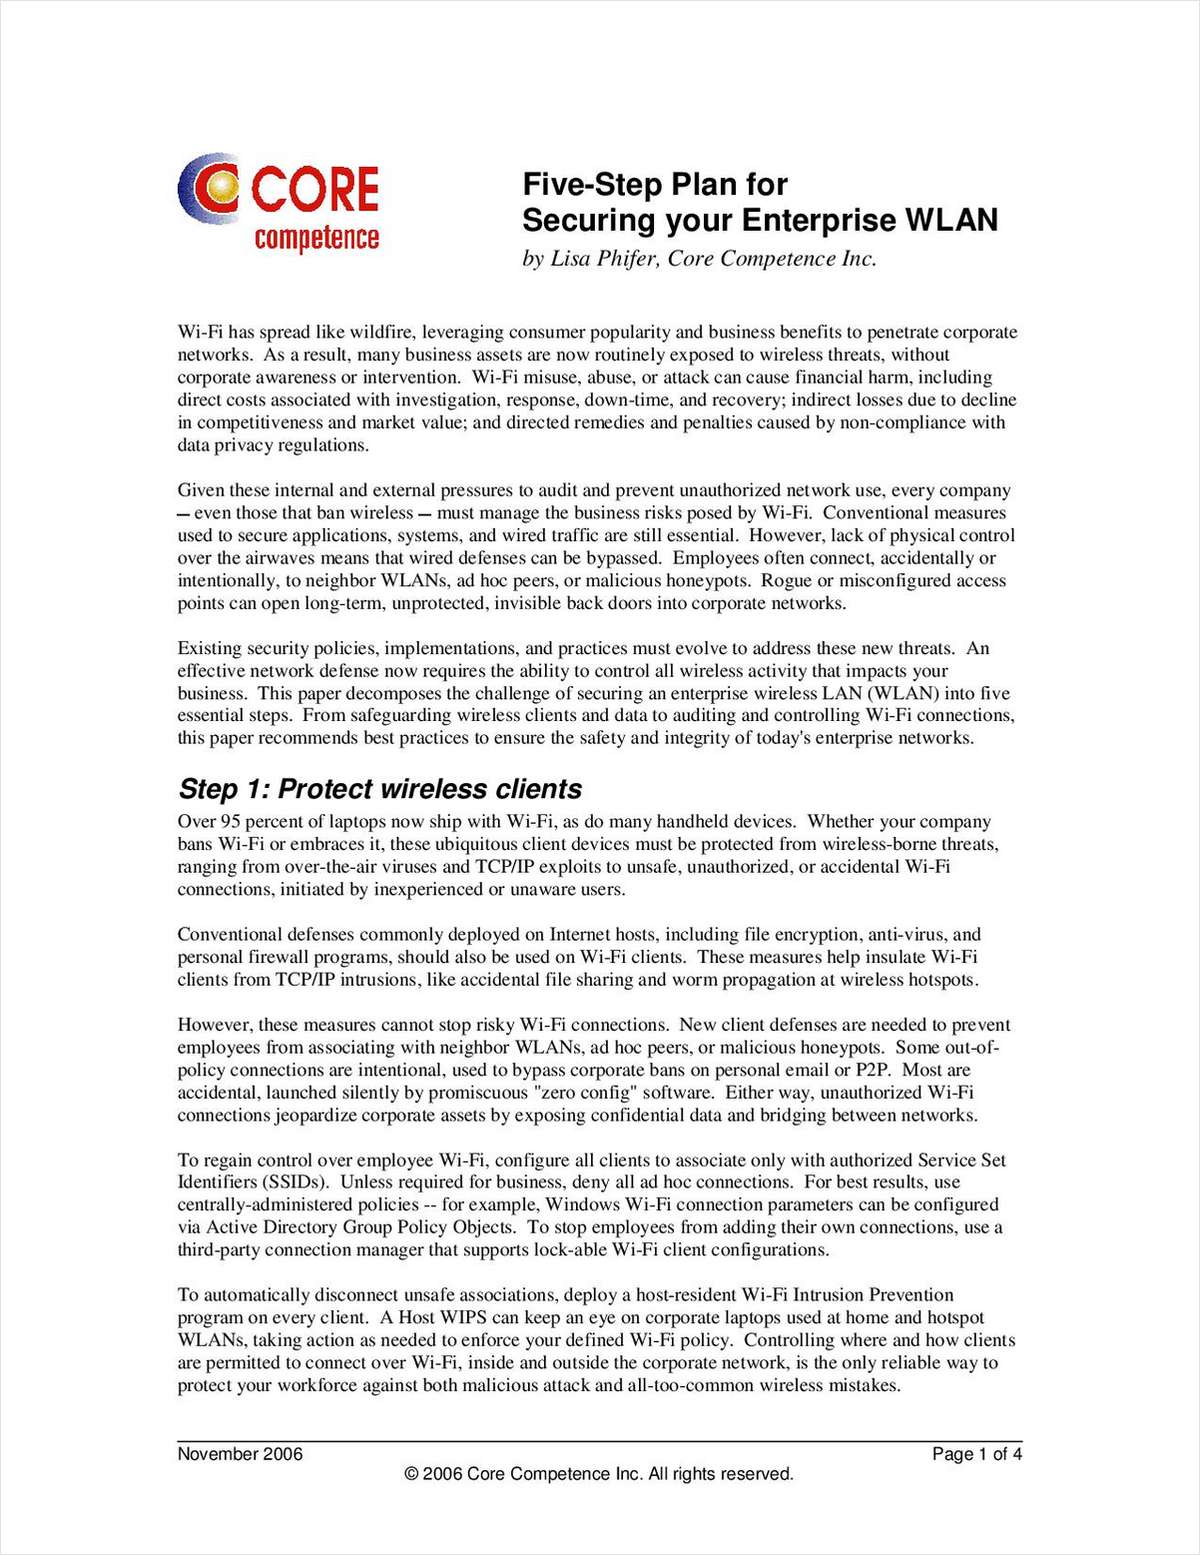 Five-Step Plan for Securing Your Enterprise WLAN